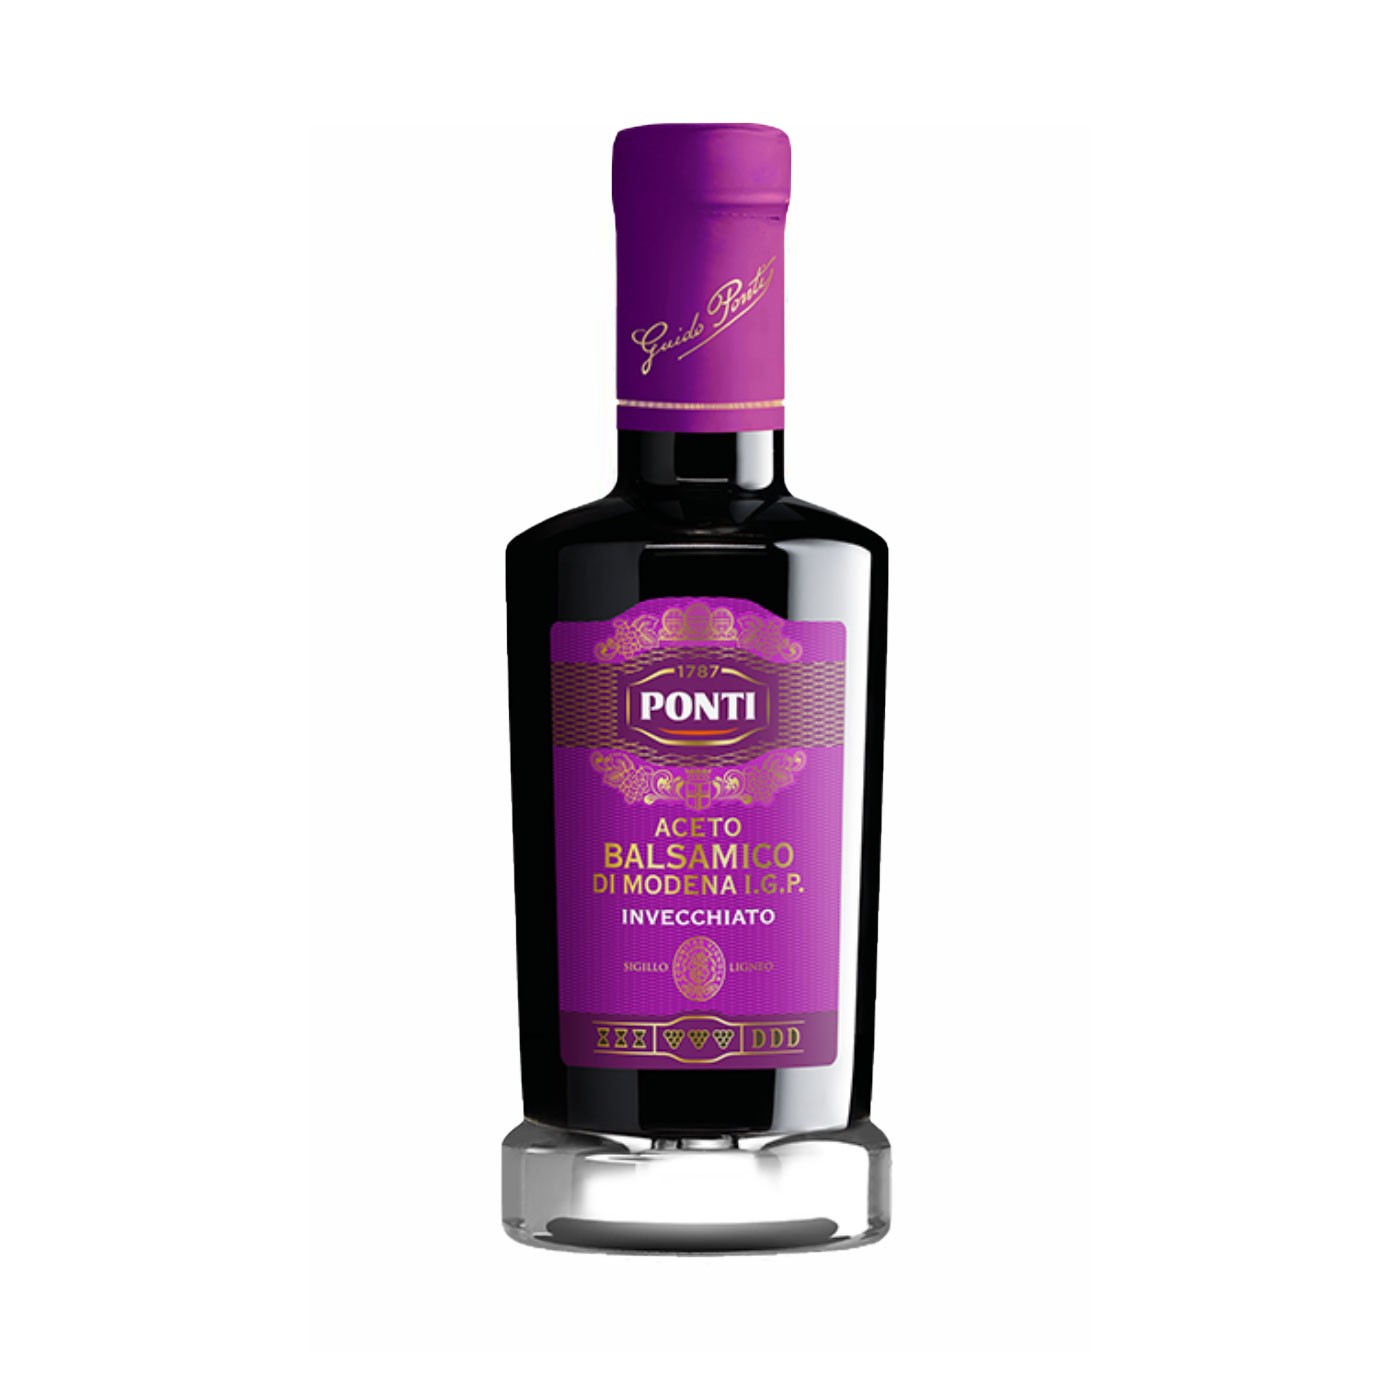 Aged Balsamic Vinegar of Modena, Purple Label 8 oz